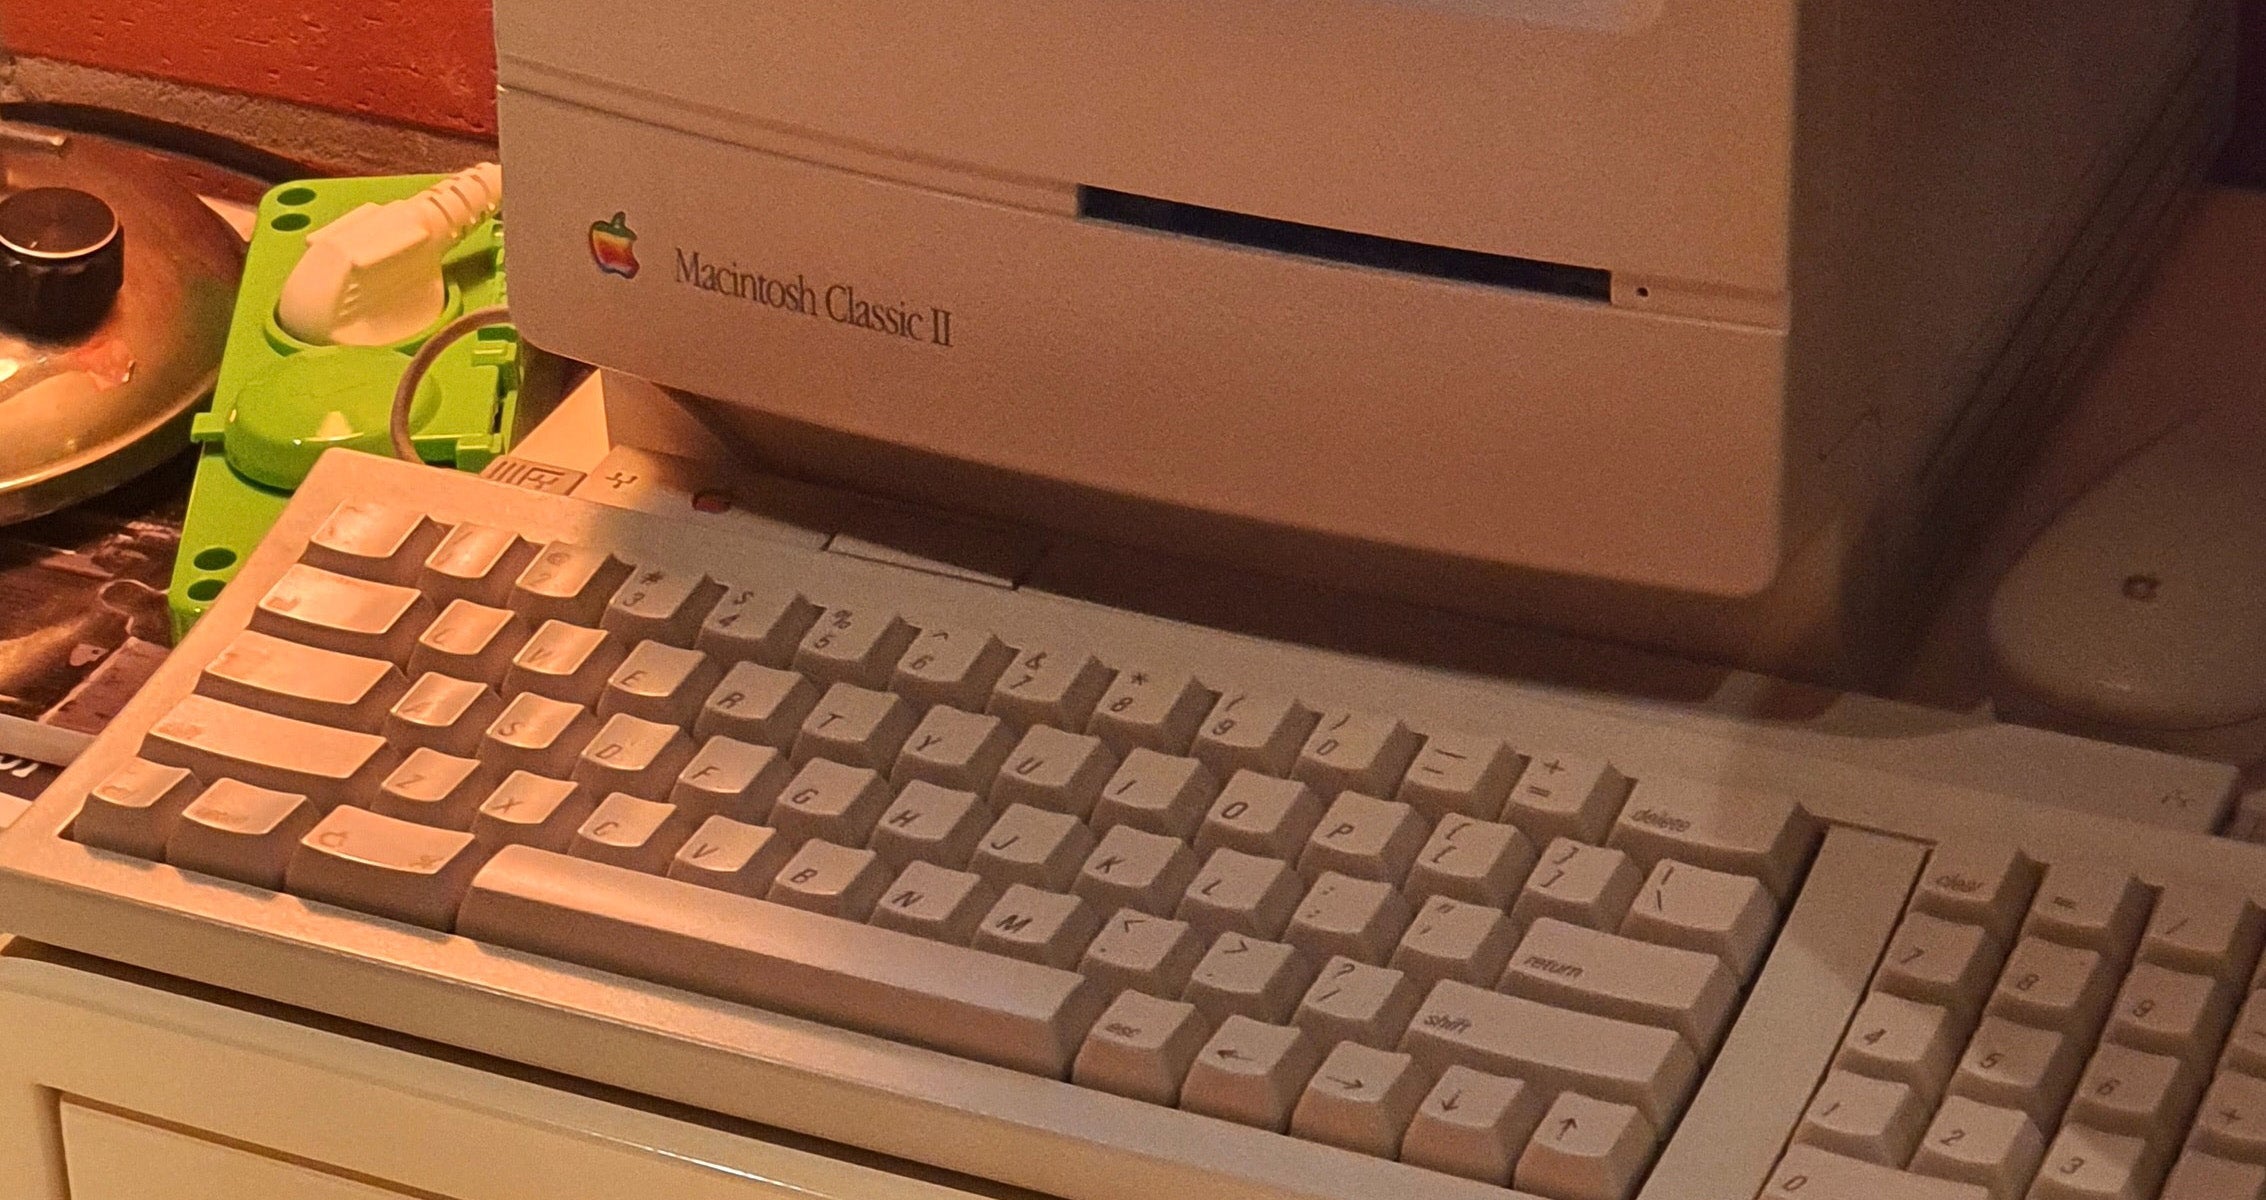 macintosh classic computer and keyboard